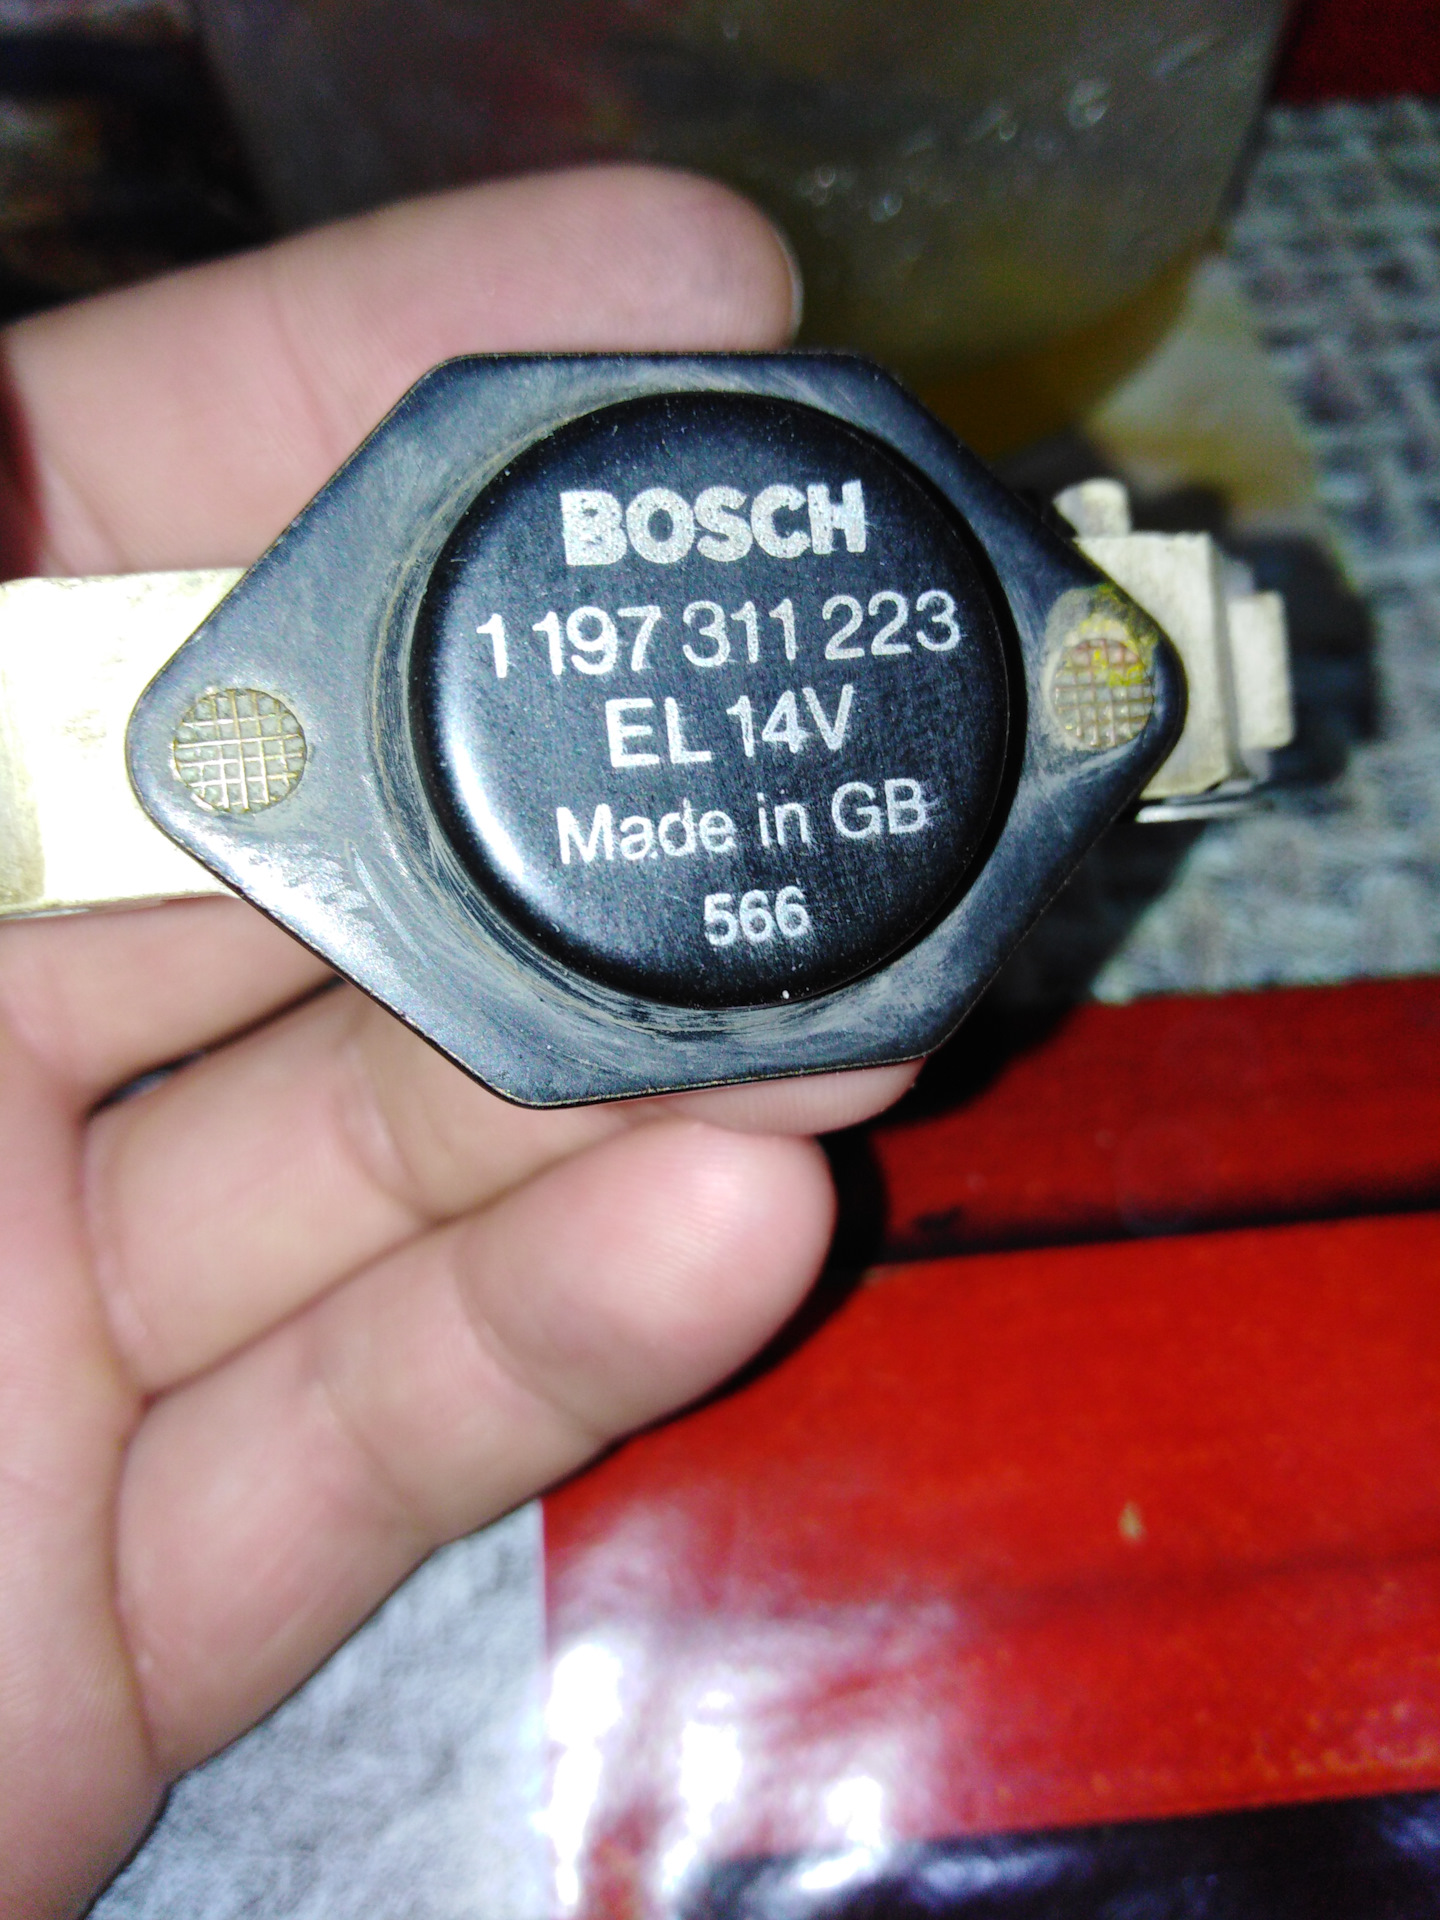 Регулятор напряжения ауди. Ауди 80 1994 года регулятор напряжения. Щетки регулятора напряжения Bosch. Замена щеток регулятора напряжения Bosch. L9407f вместо родного регулятора.